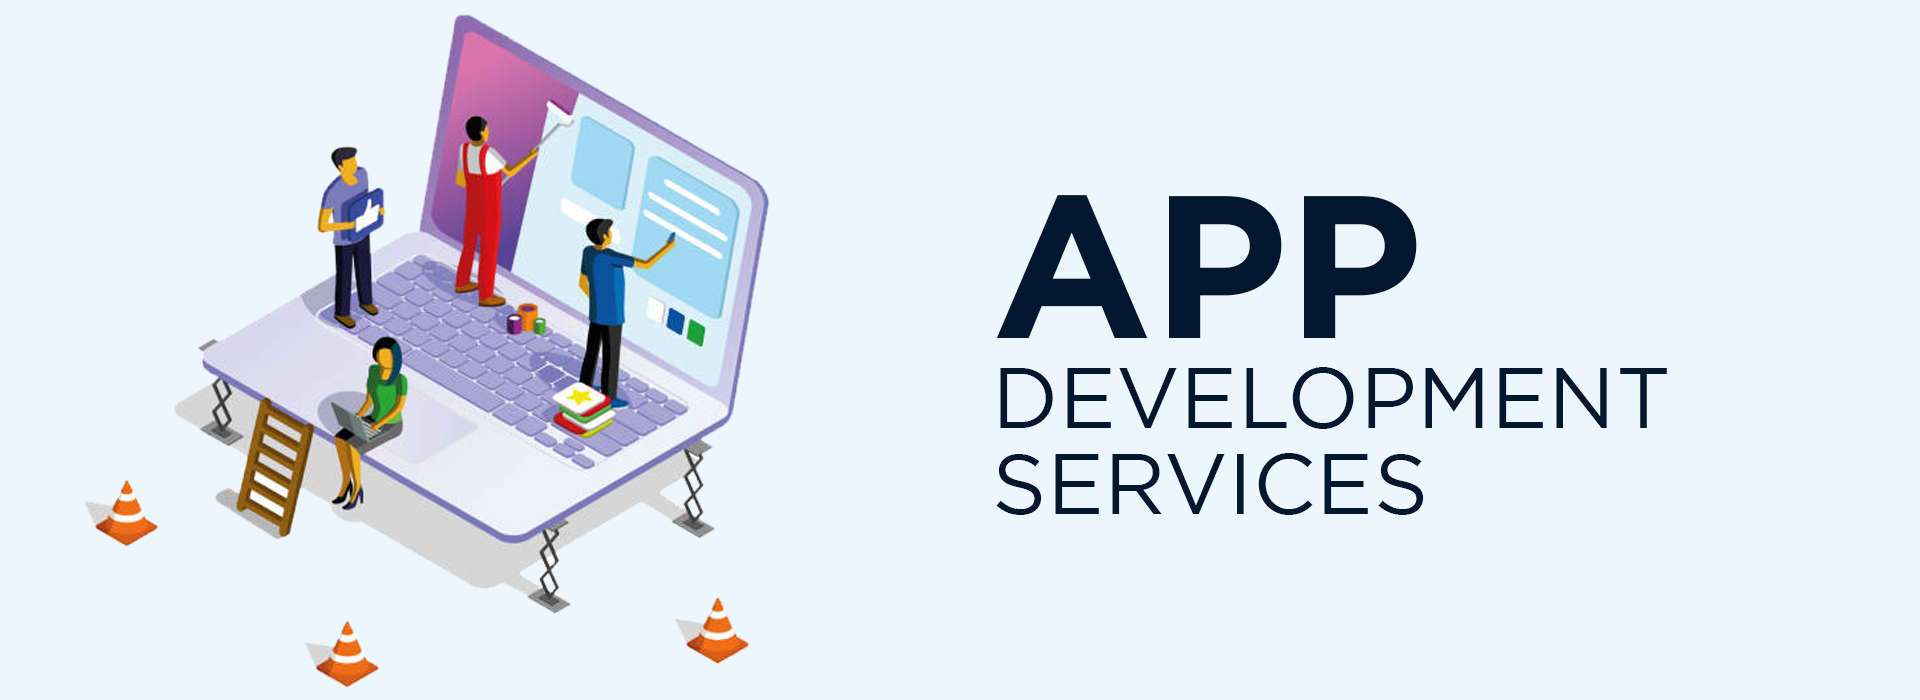 'website design services', 'website development services', 'app development services' 